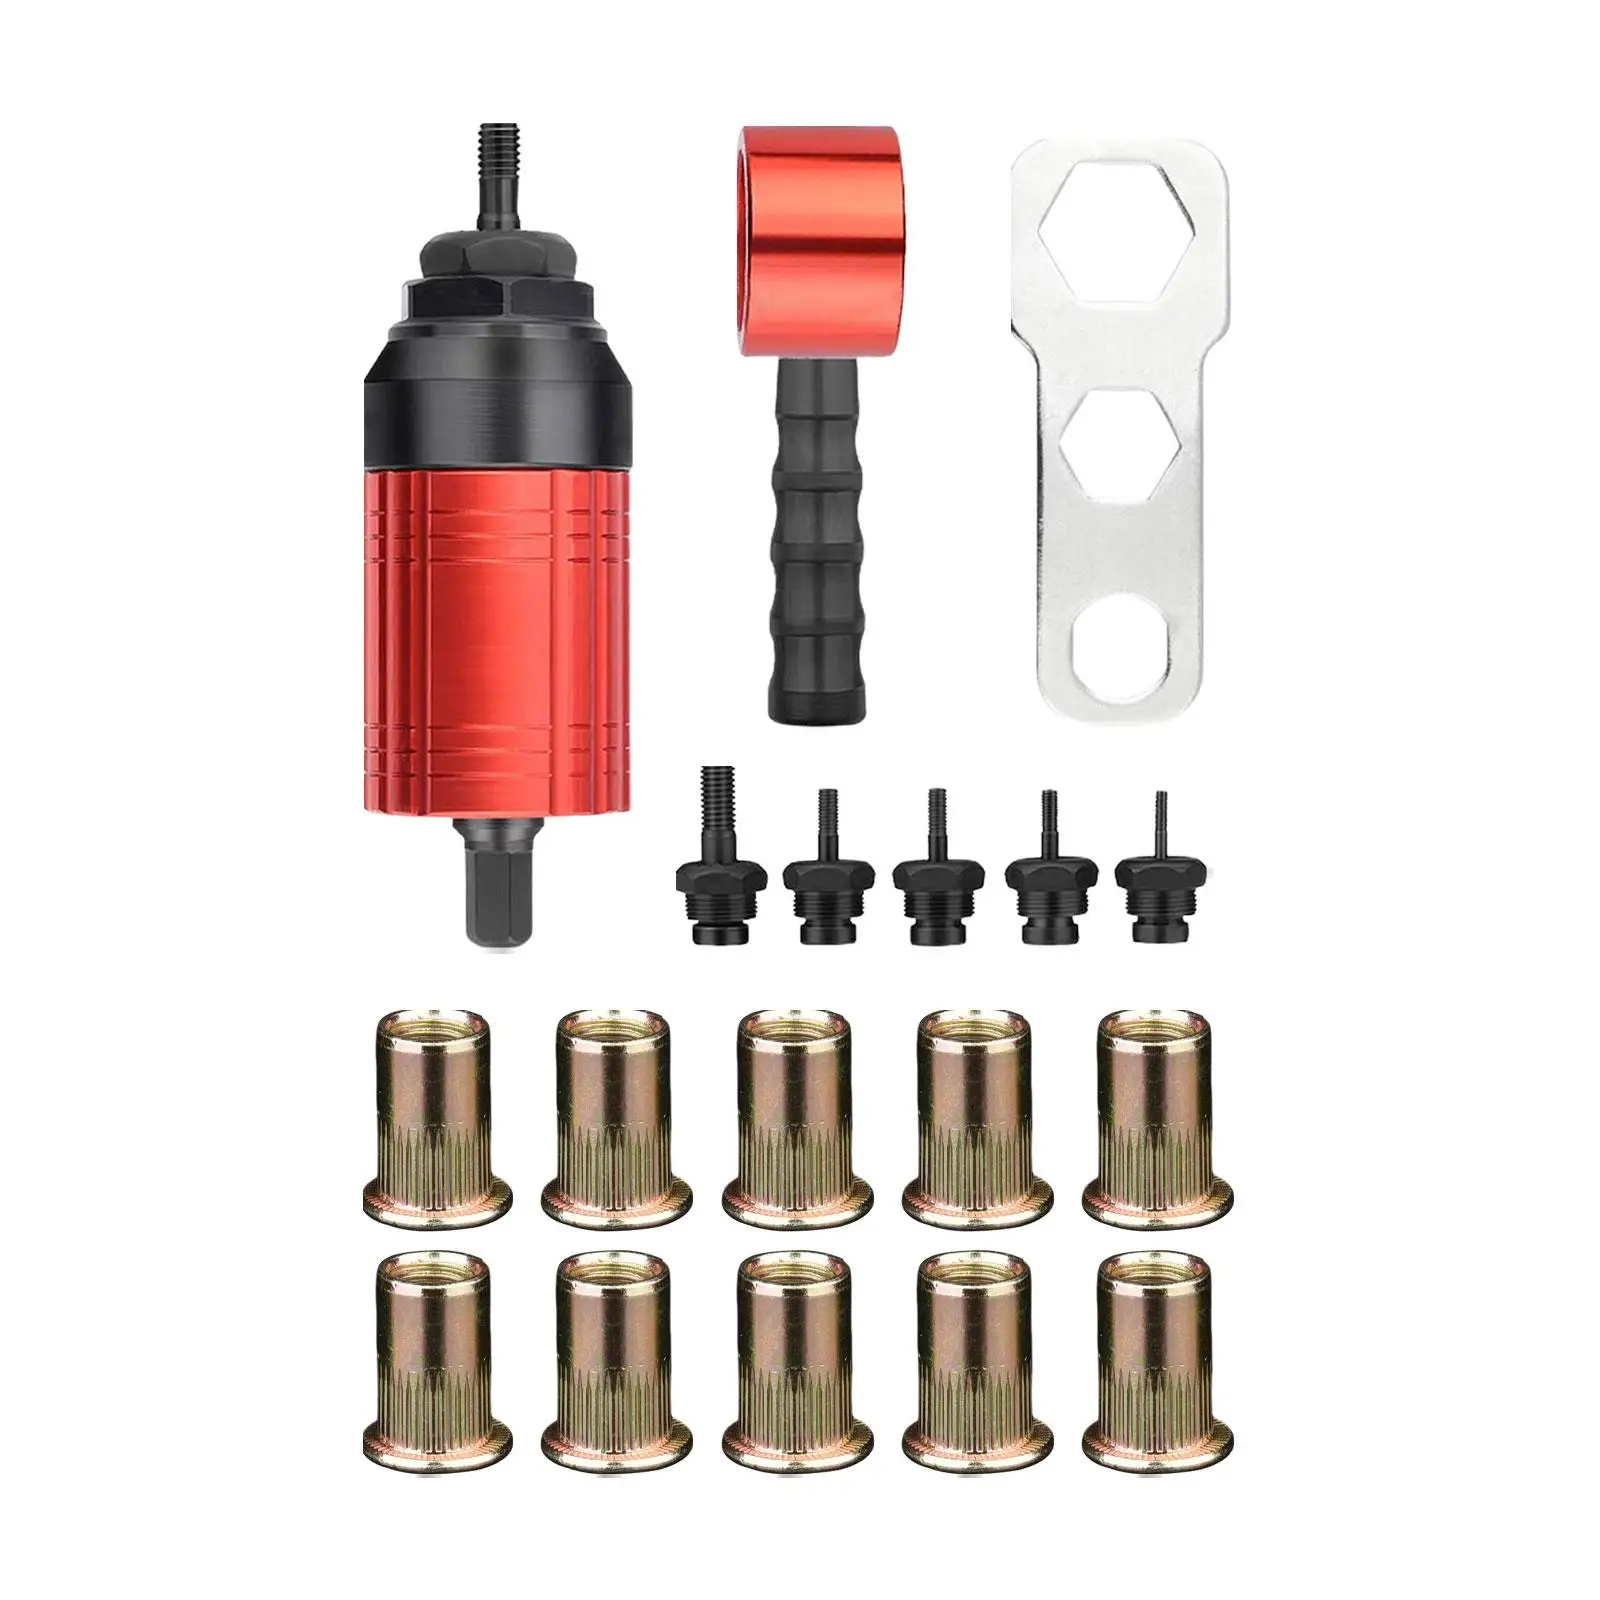 Rivet Nut Drill Adaptor Attachment Riveting Kits with 10 Rivet Nuts Ergonomic Handle Threaded Insert for Ship Repair Furniture